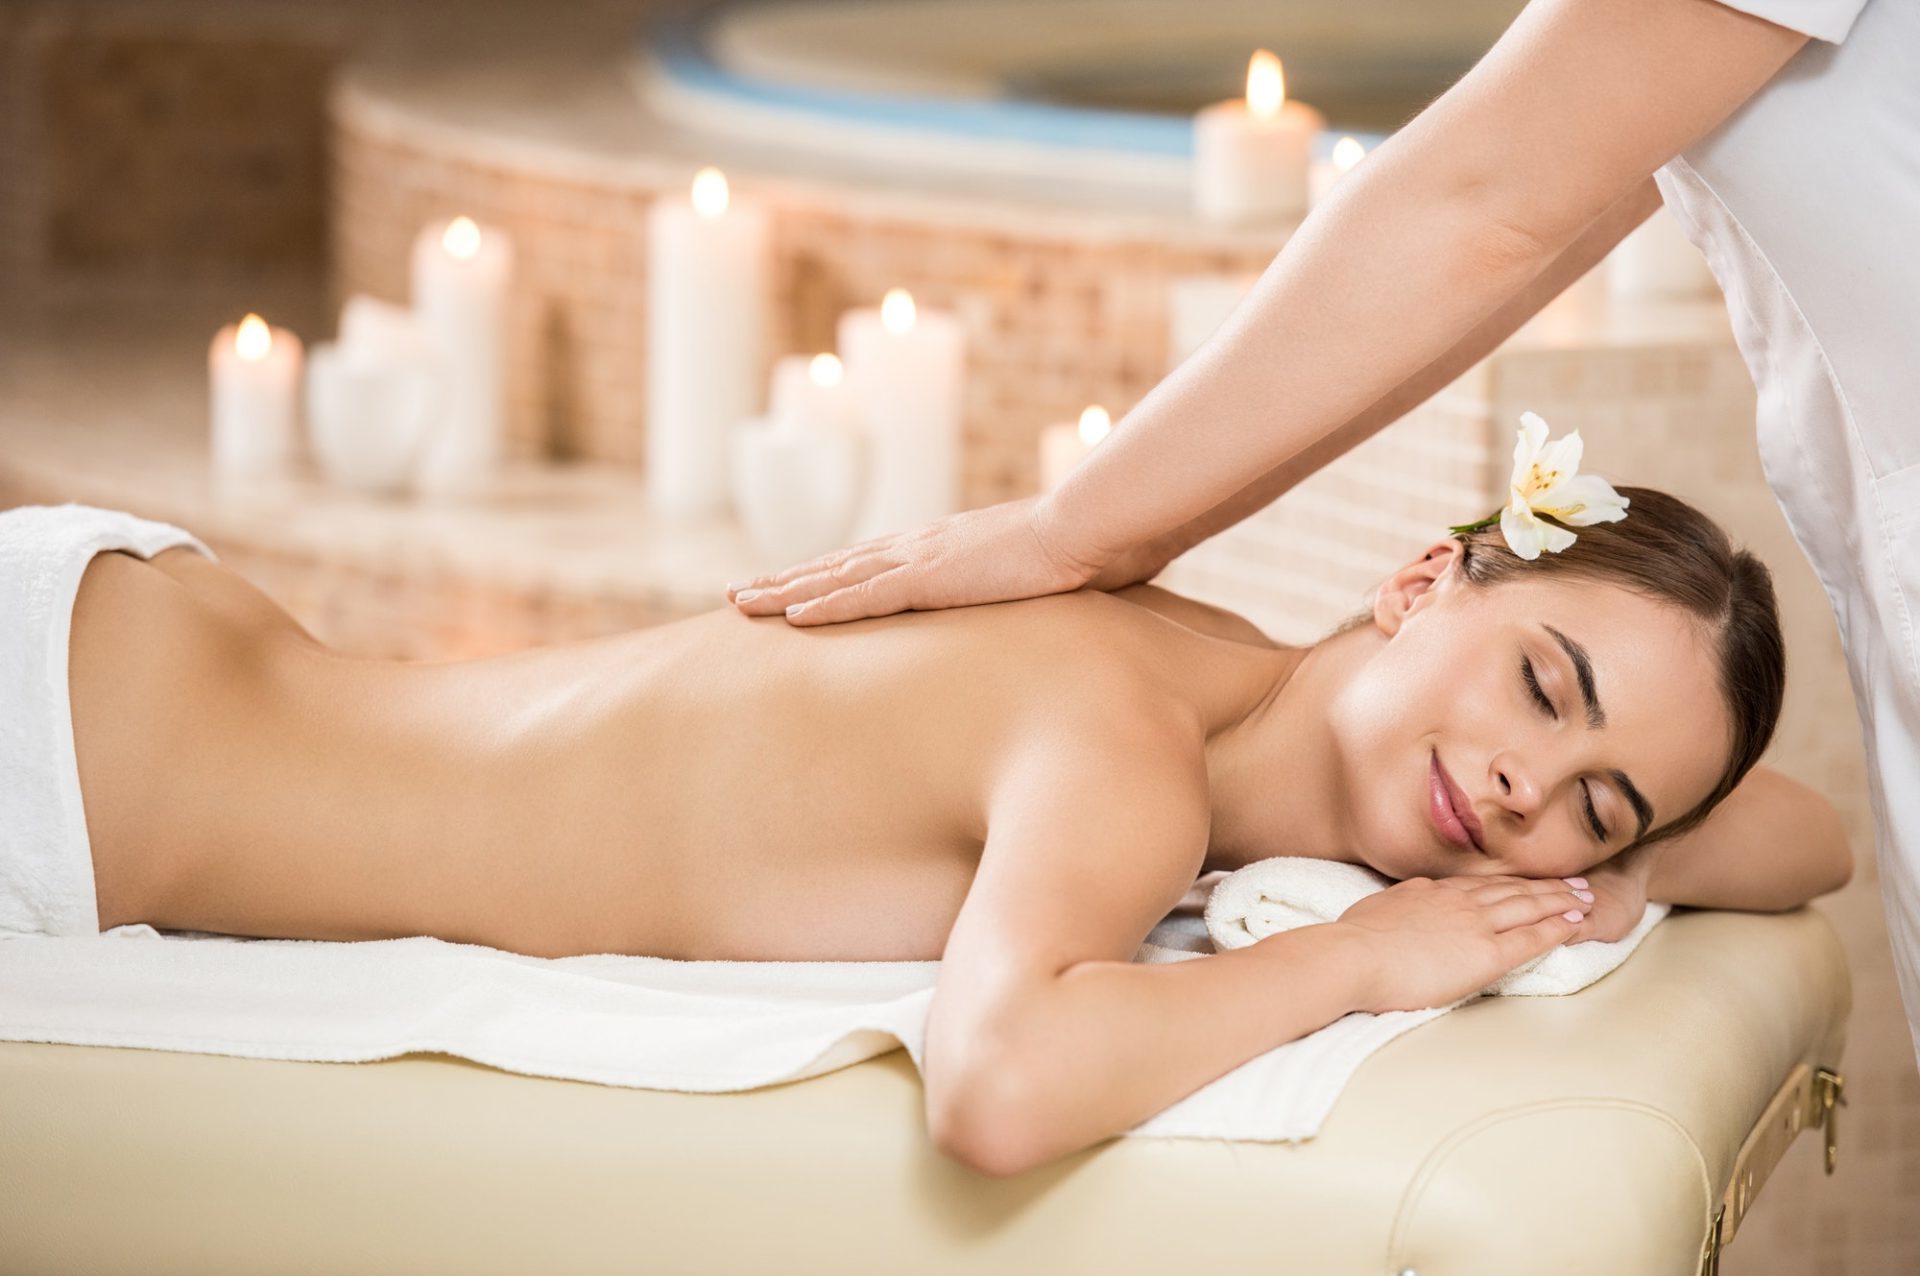 massage therapist making massage for gorgeous woman in spa salon